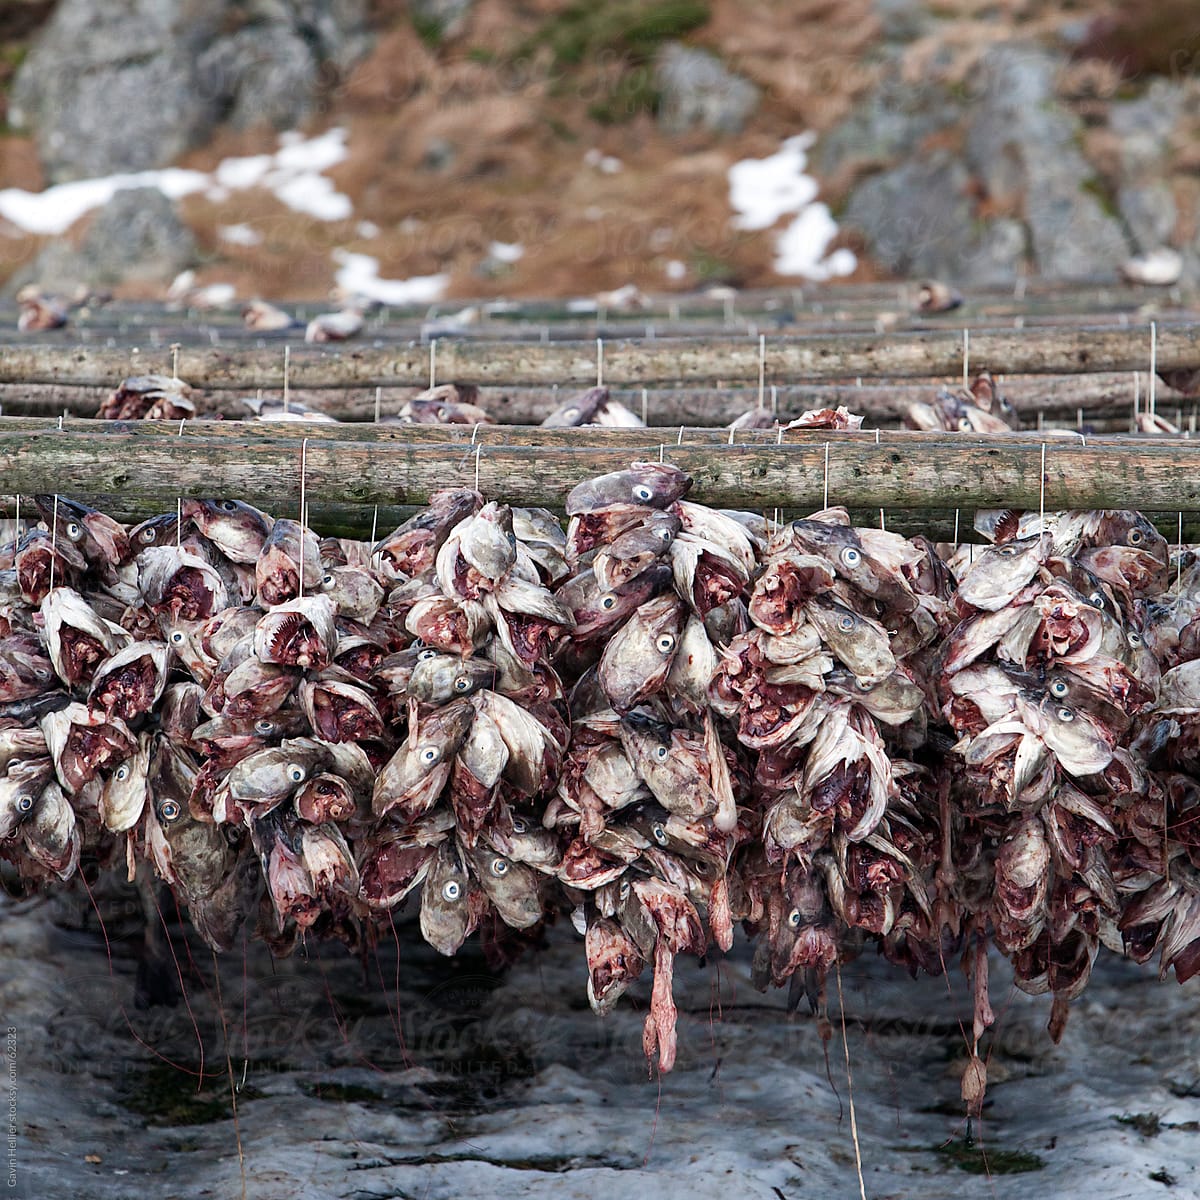 Stockfish (Cod) drying on wooden racks, Lofoten, Nordland, Norway, Scandinavia